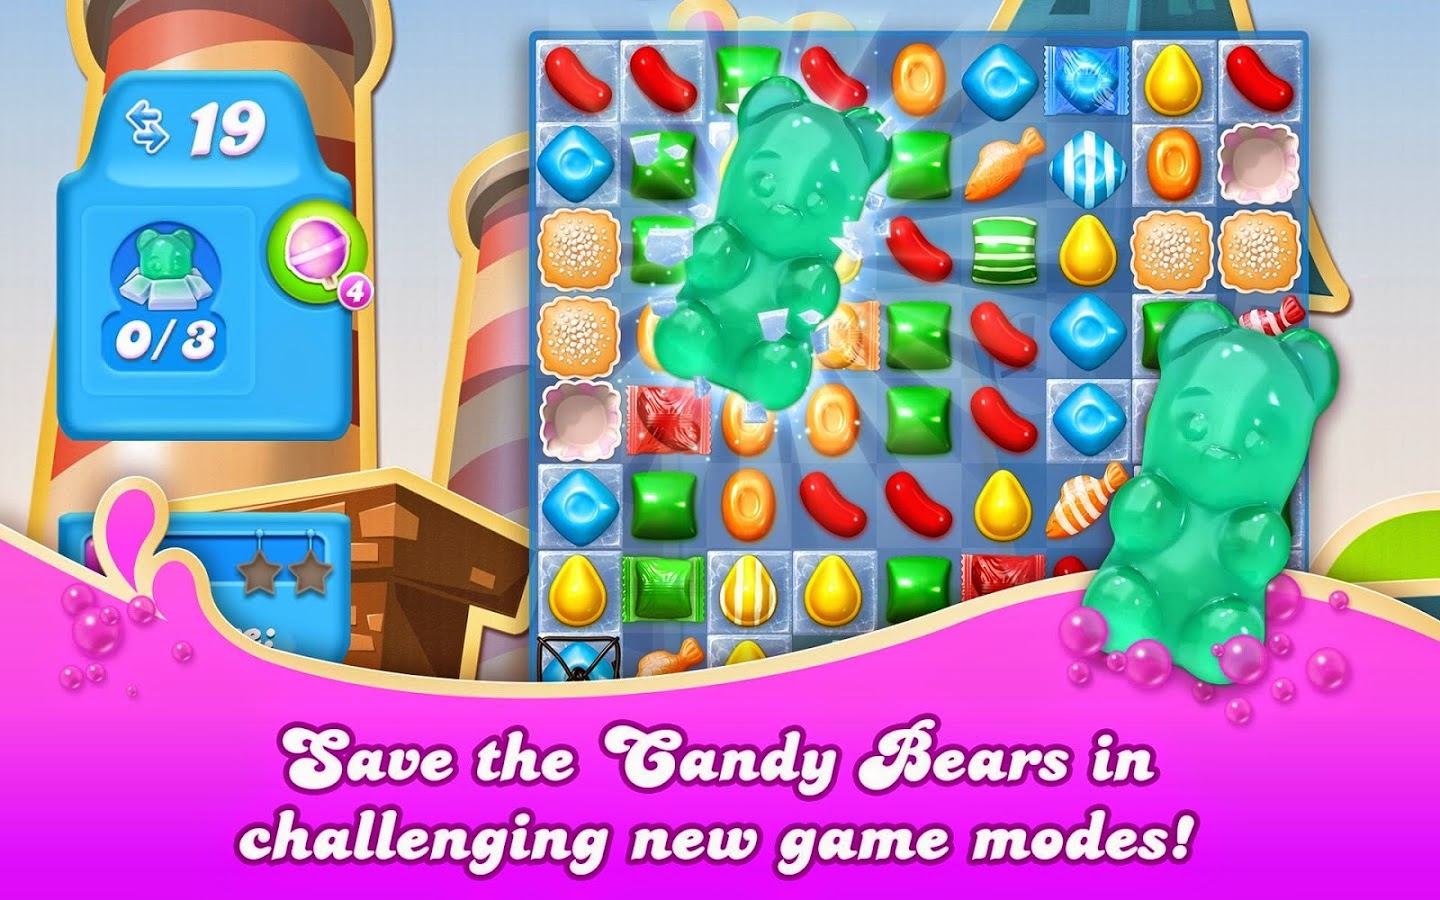 Free download official game Candy Crush Soda Saga .apk full + data